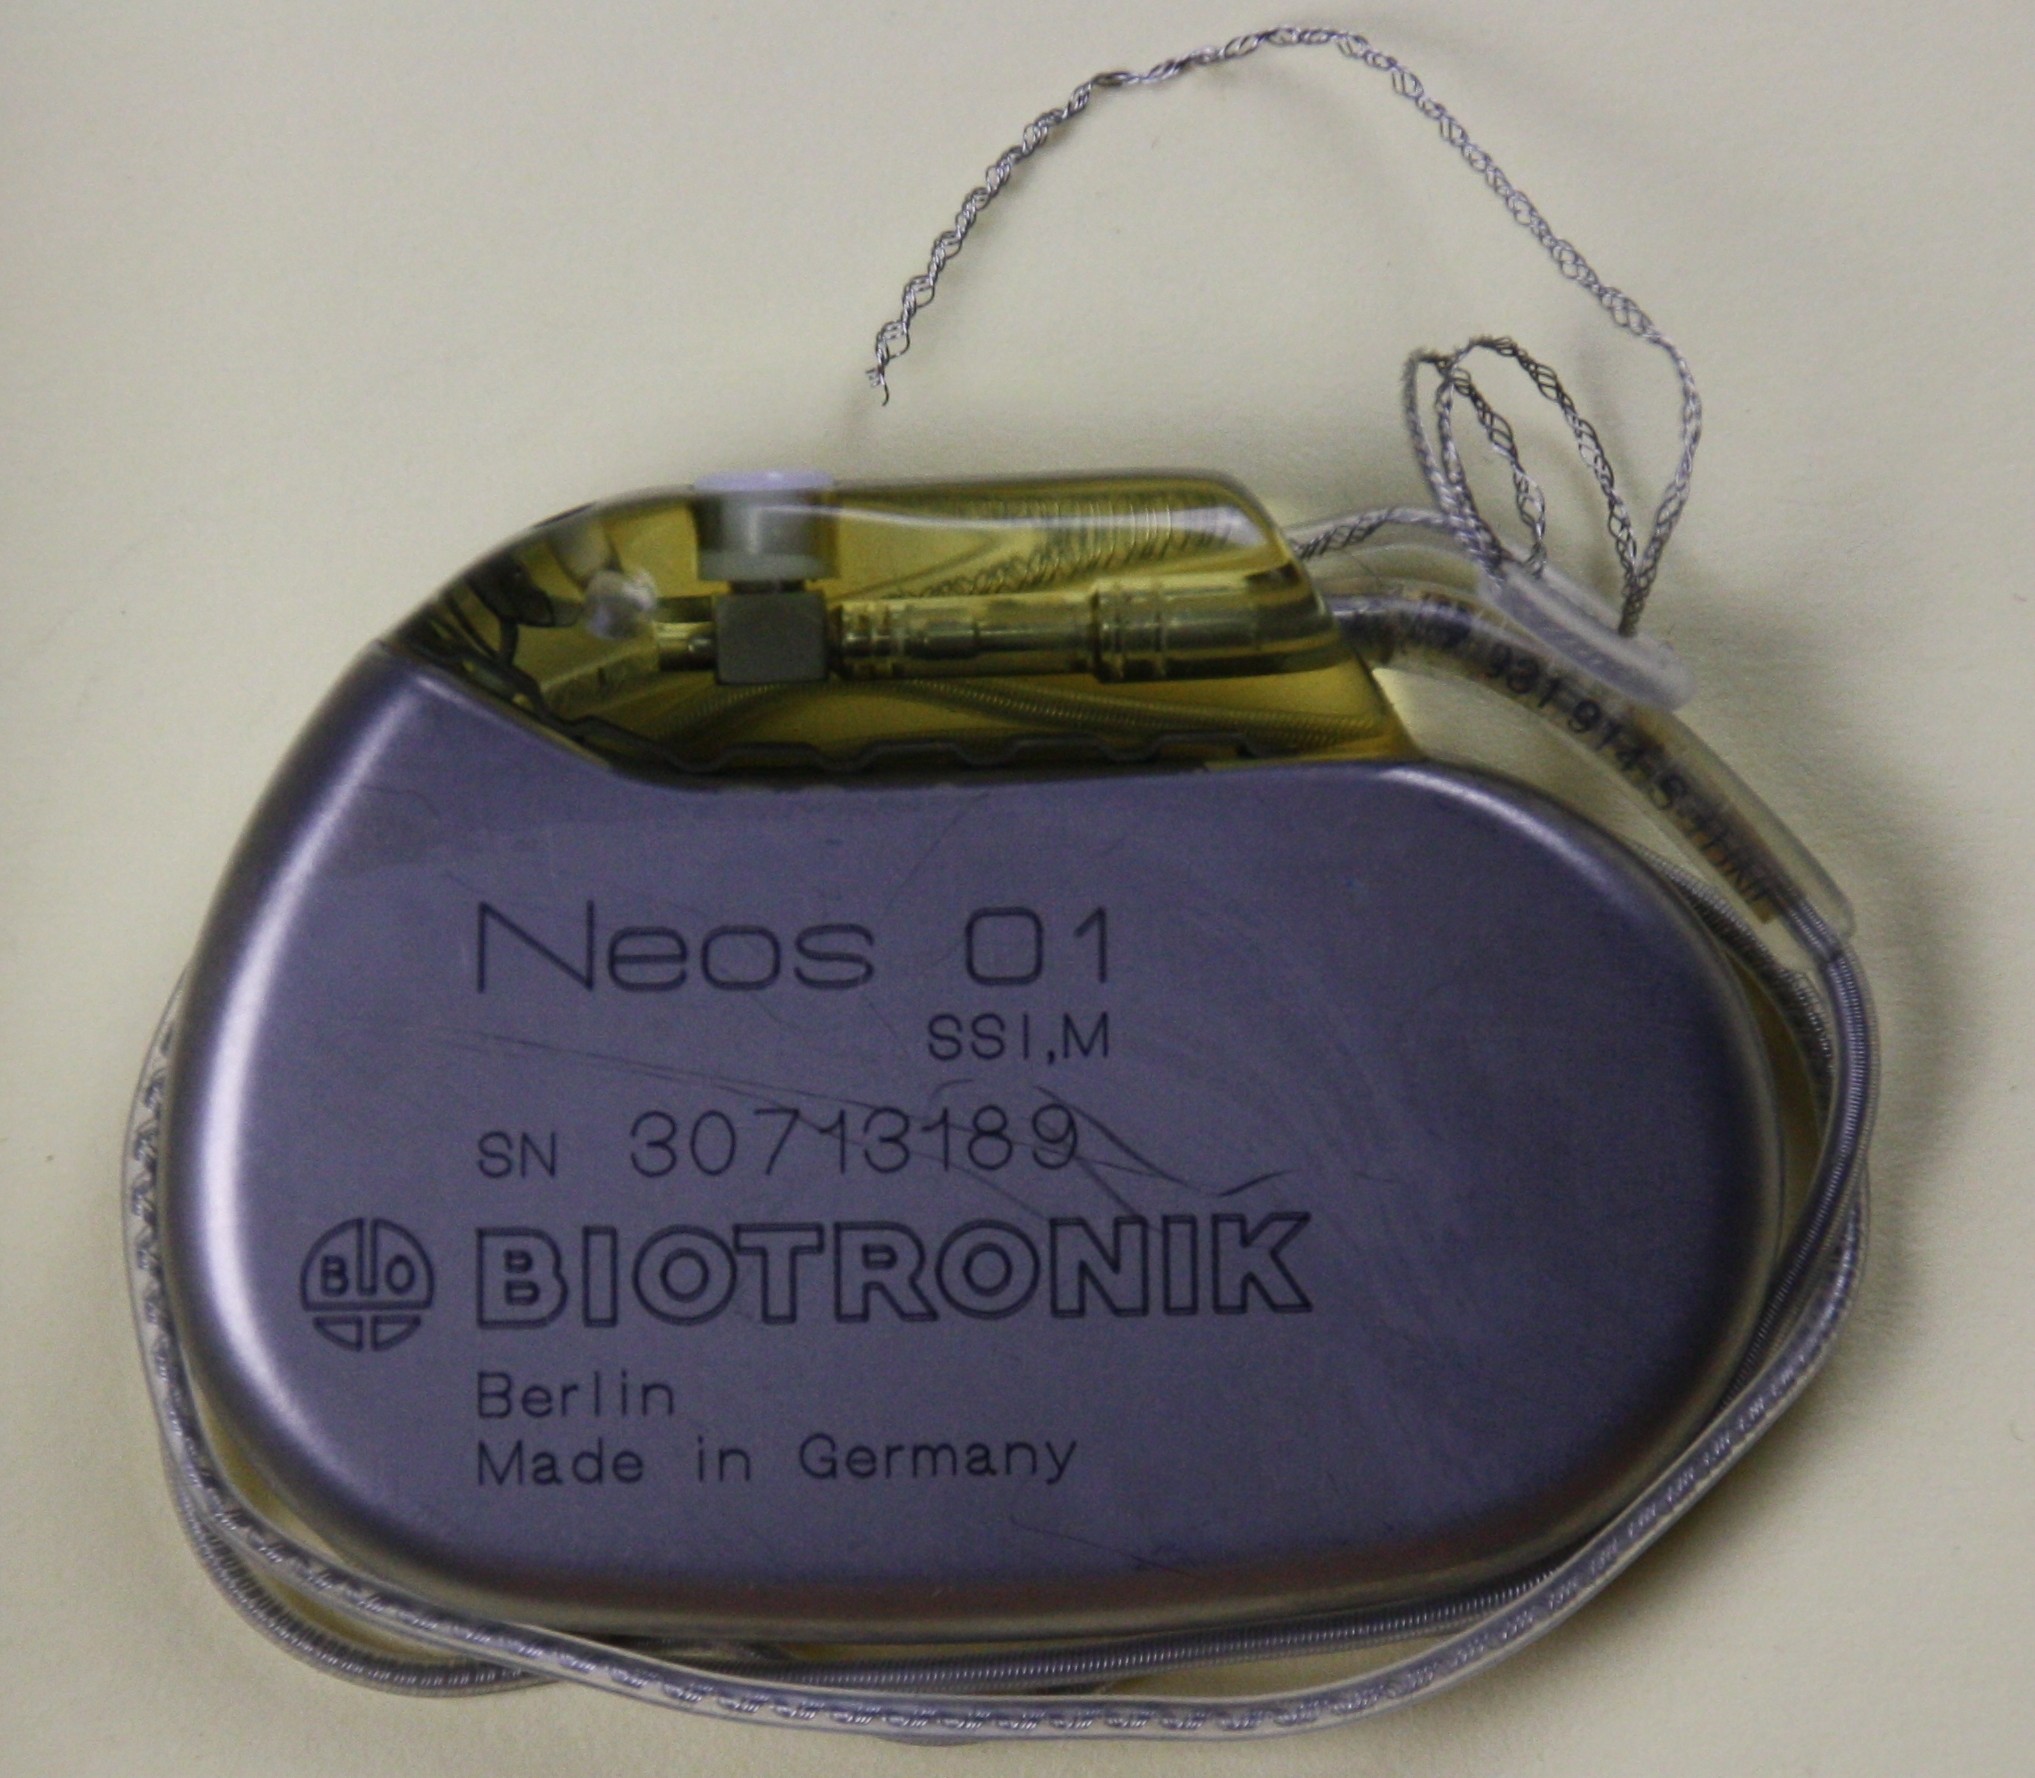 Herzschrittmacher-Implantat Biotronik Neos 01 (Krankenhausmuseum Bielefeld e.V. CC BY-NC-SA)